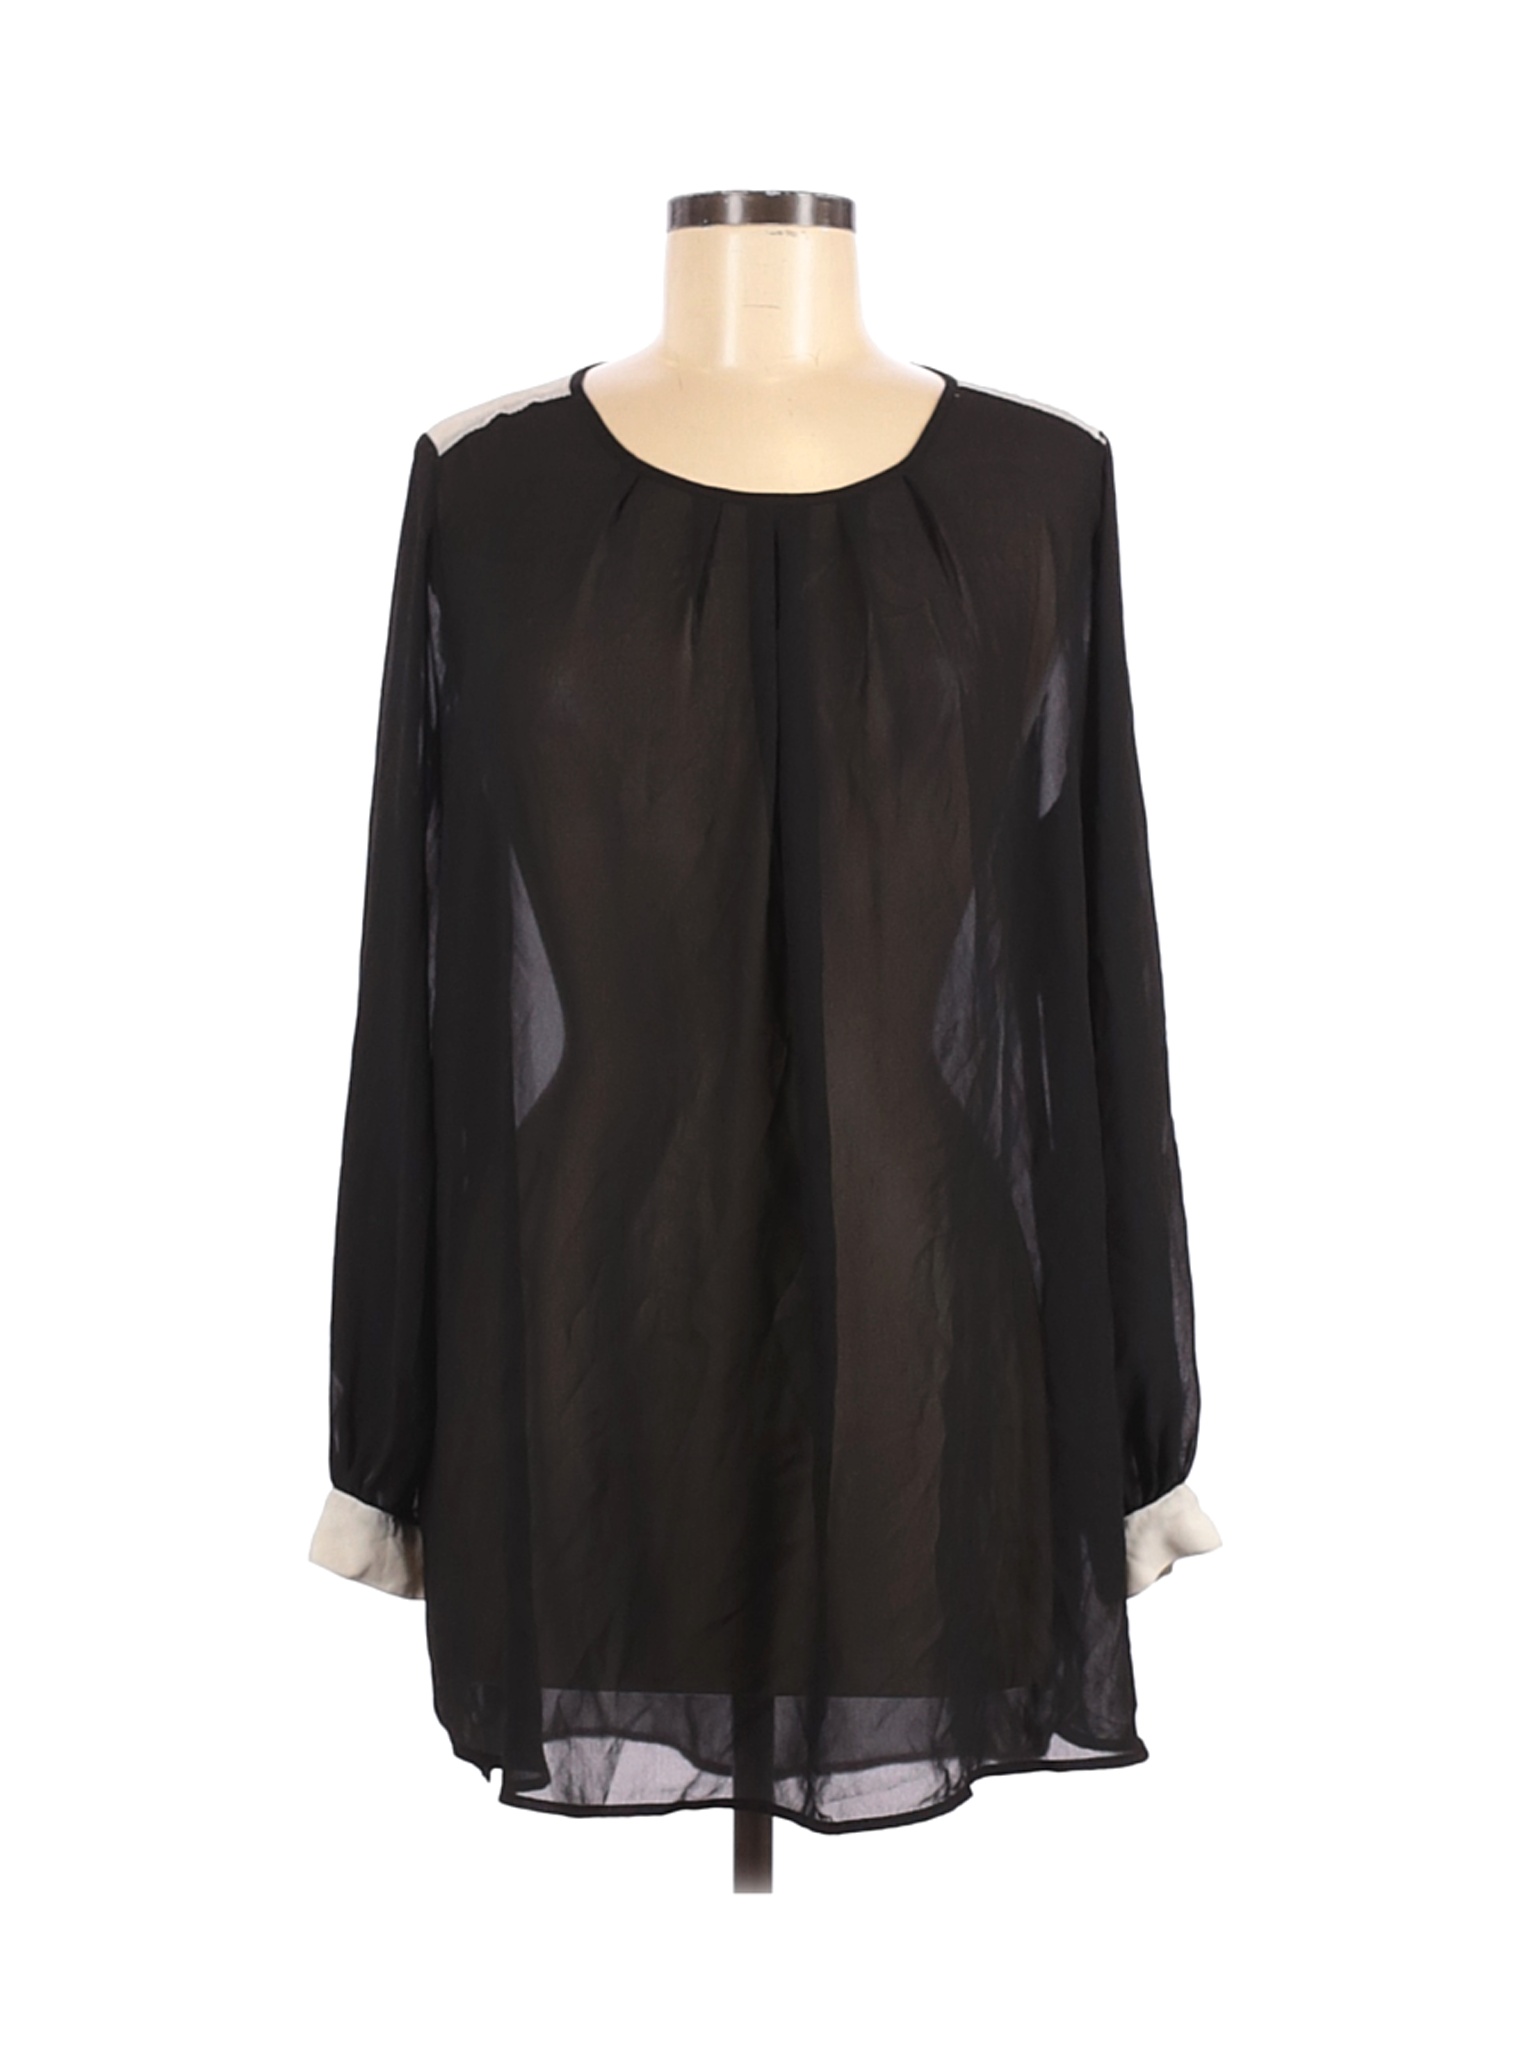 H&M Women Black Long Sleeve Blouse 8 | eBay